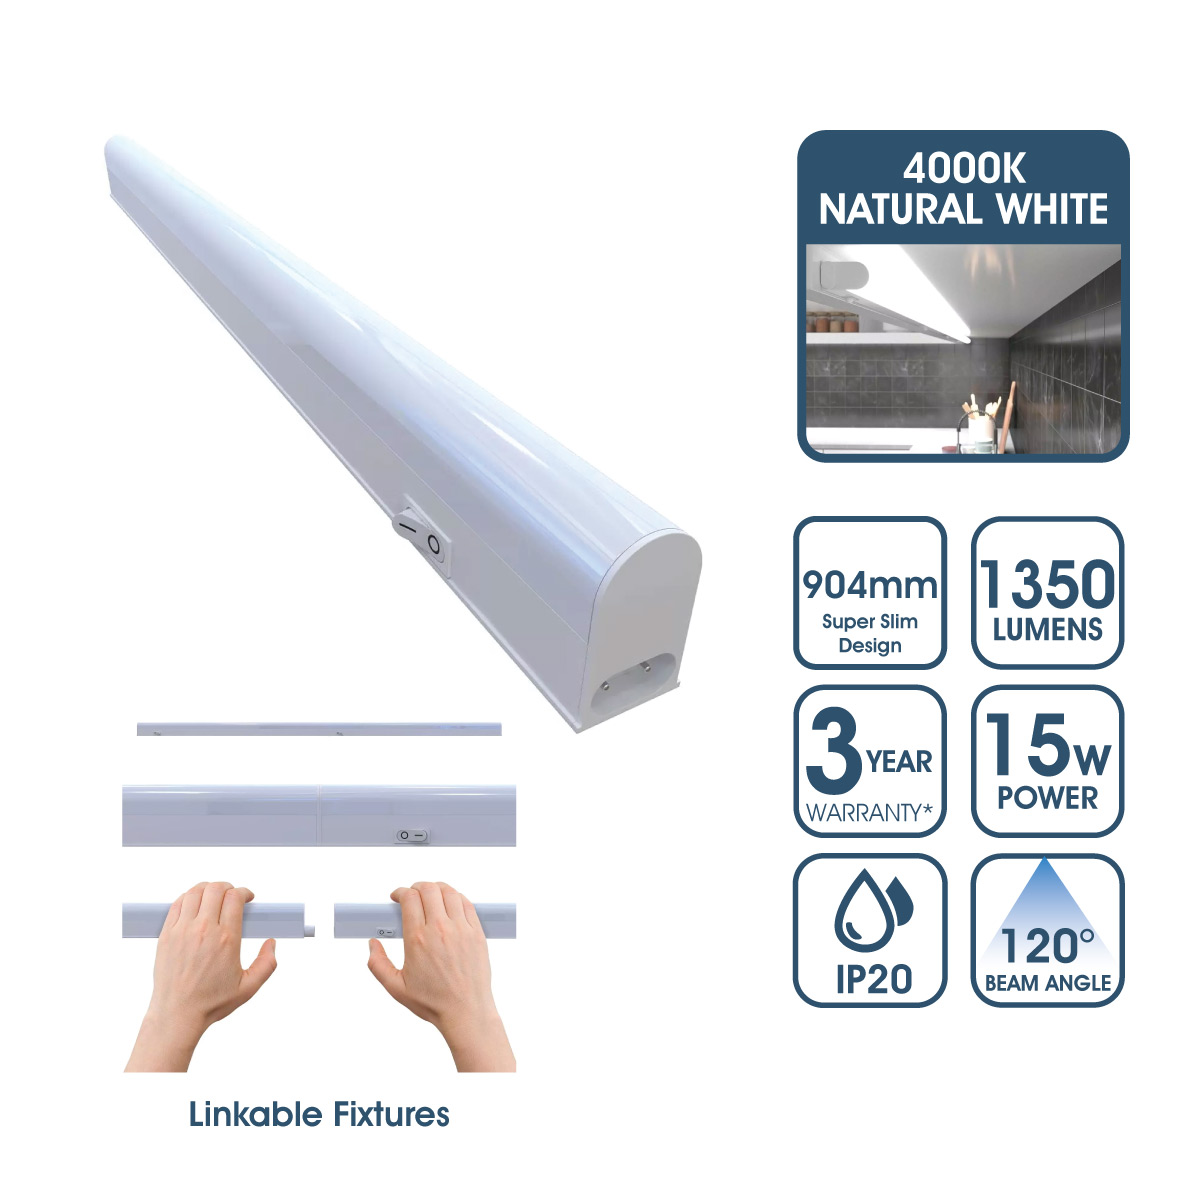 View 904mm Linkable LED Ultraslim Under Cabinet Light Fitting Natural White information